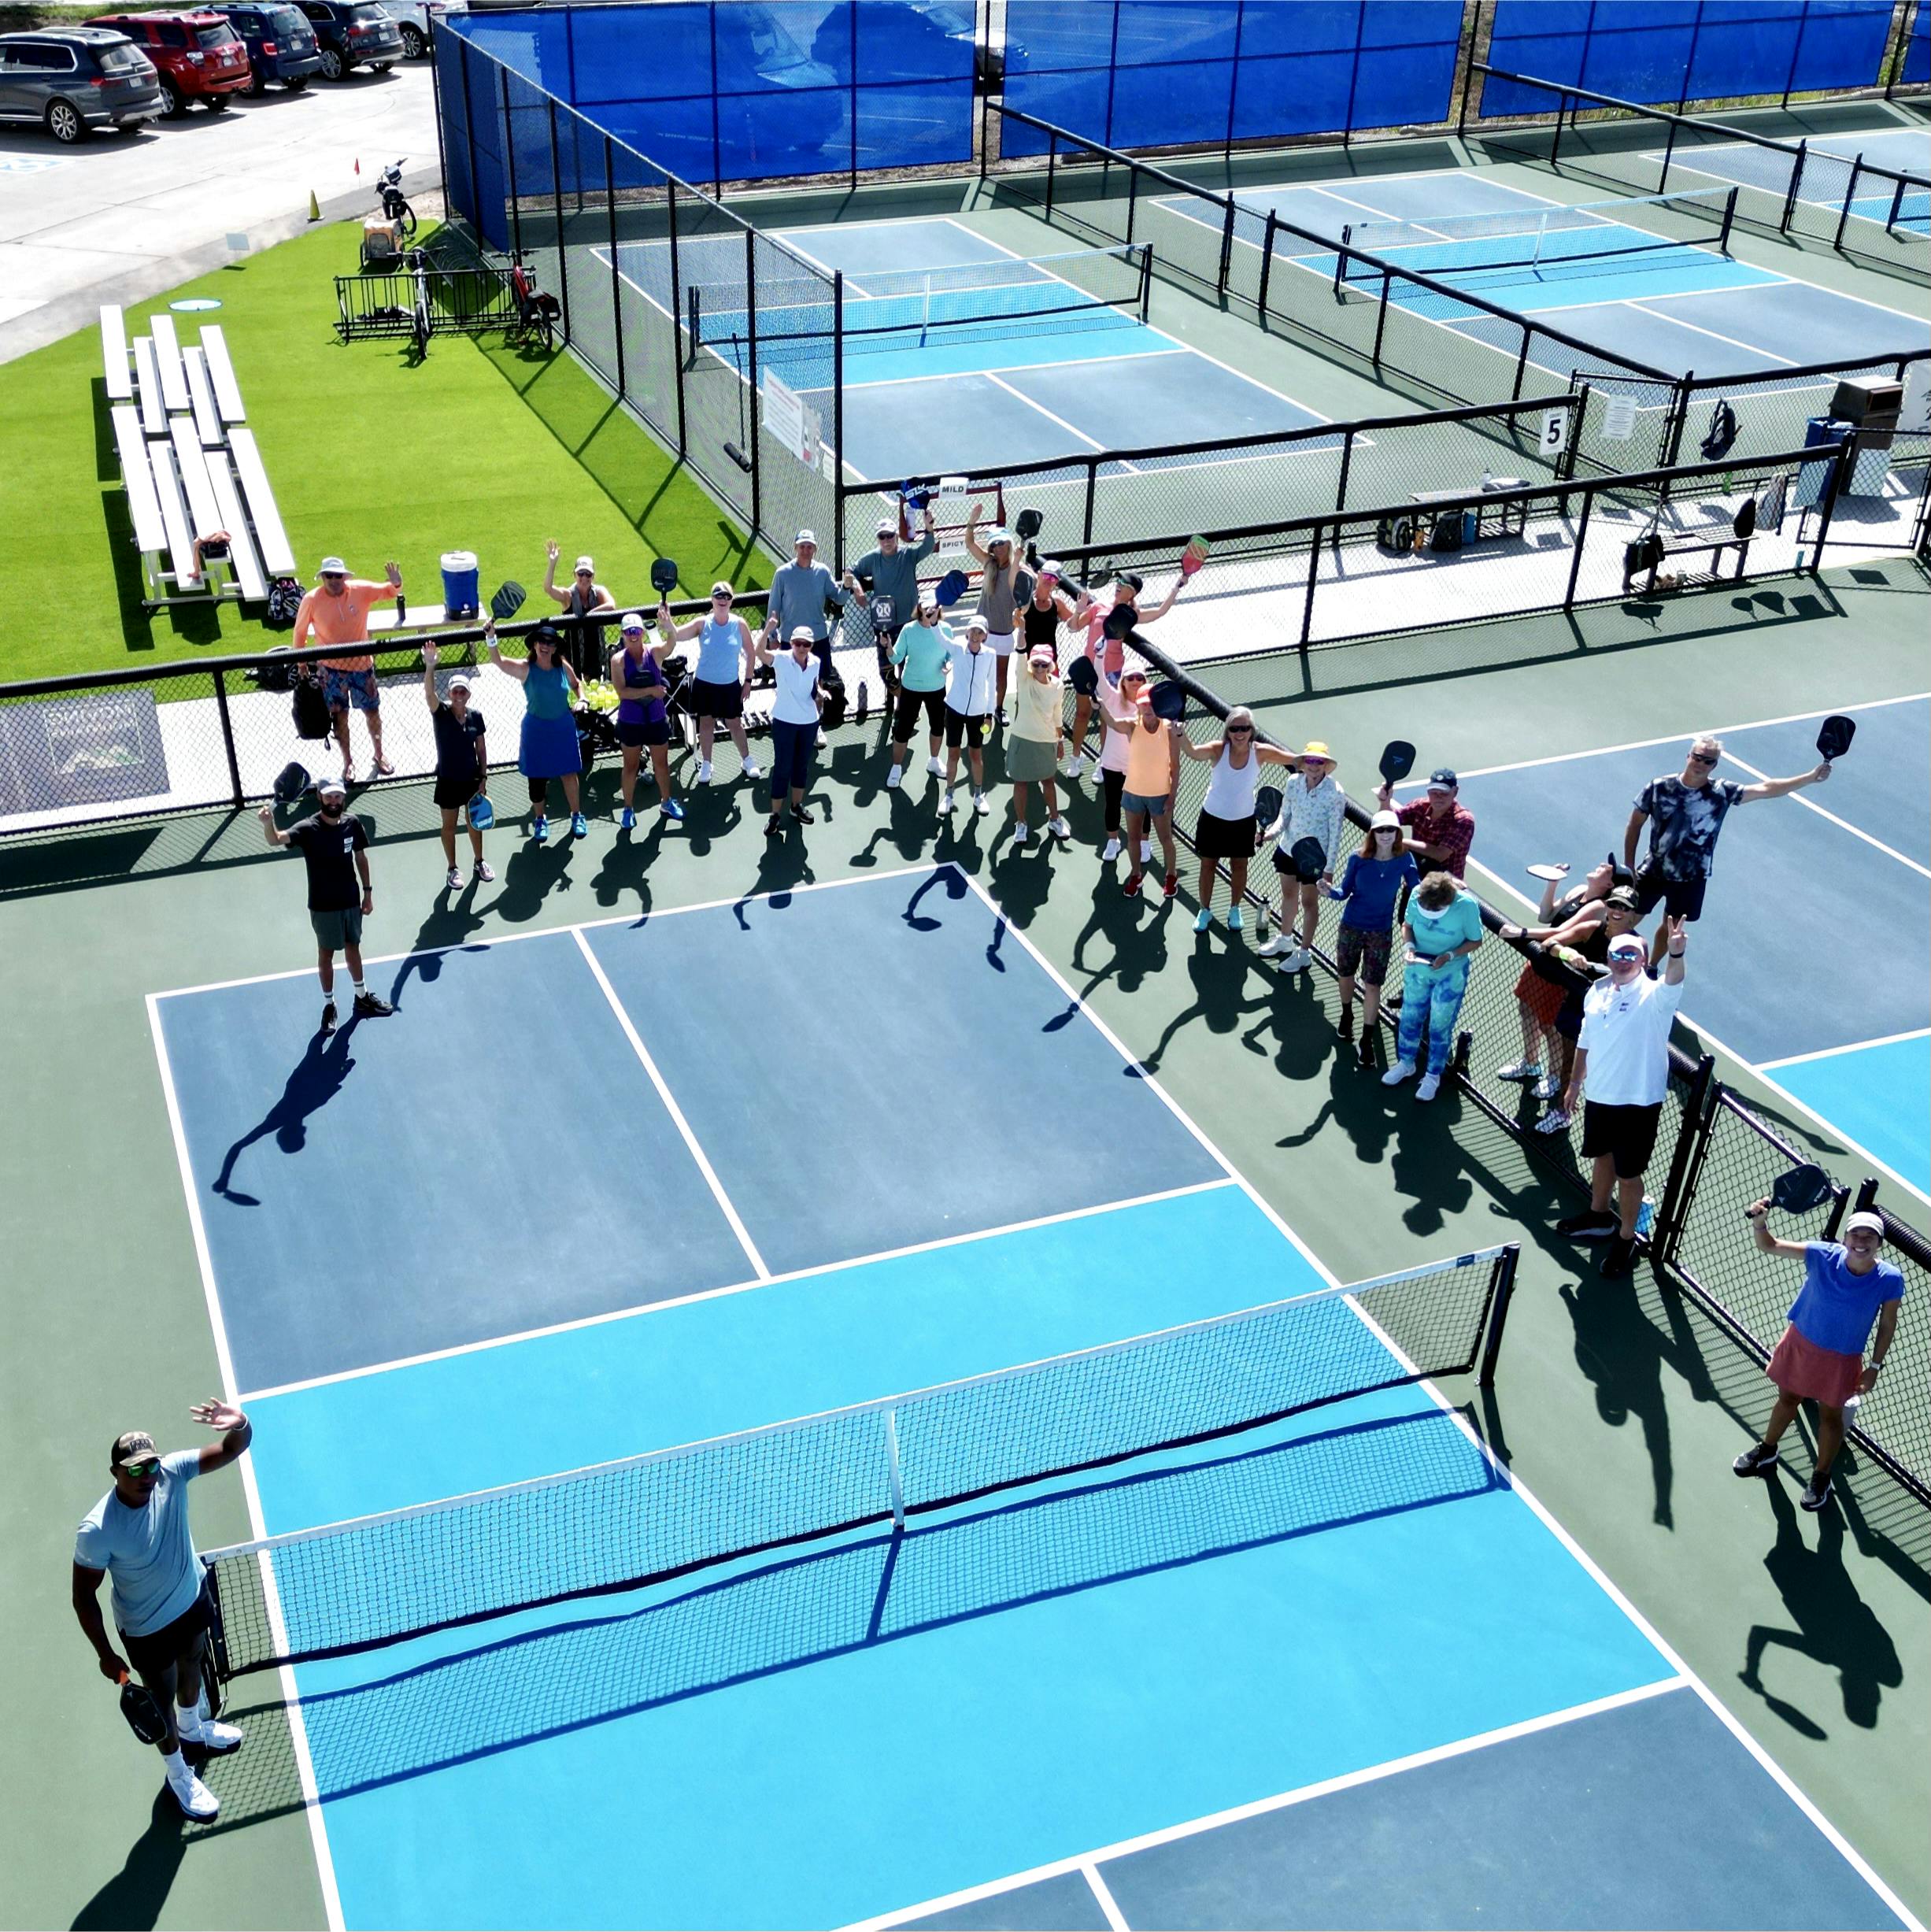 Image 2 of 8 of Steamboat Springs Tennis & Pickleball Center court